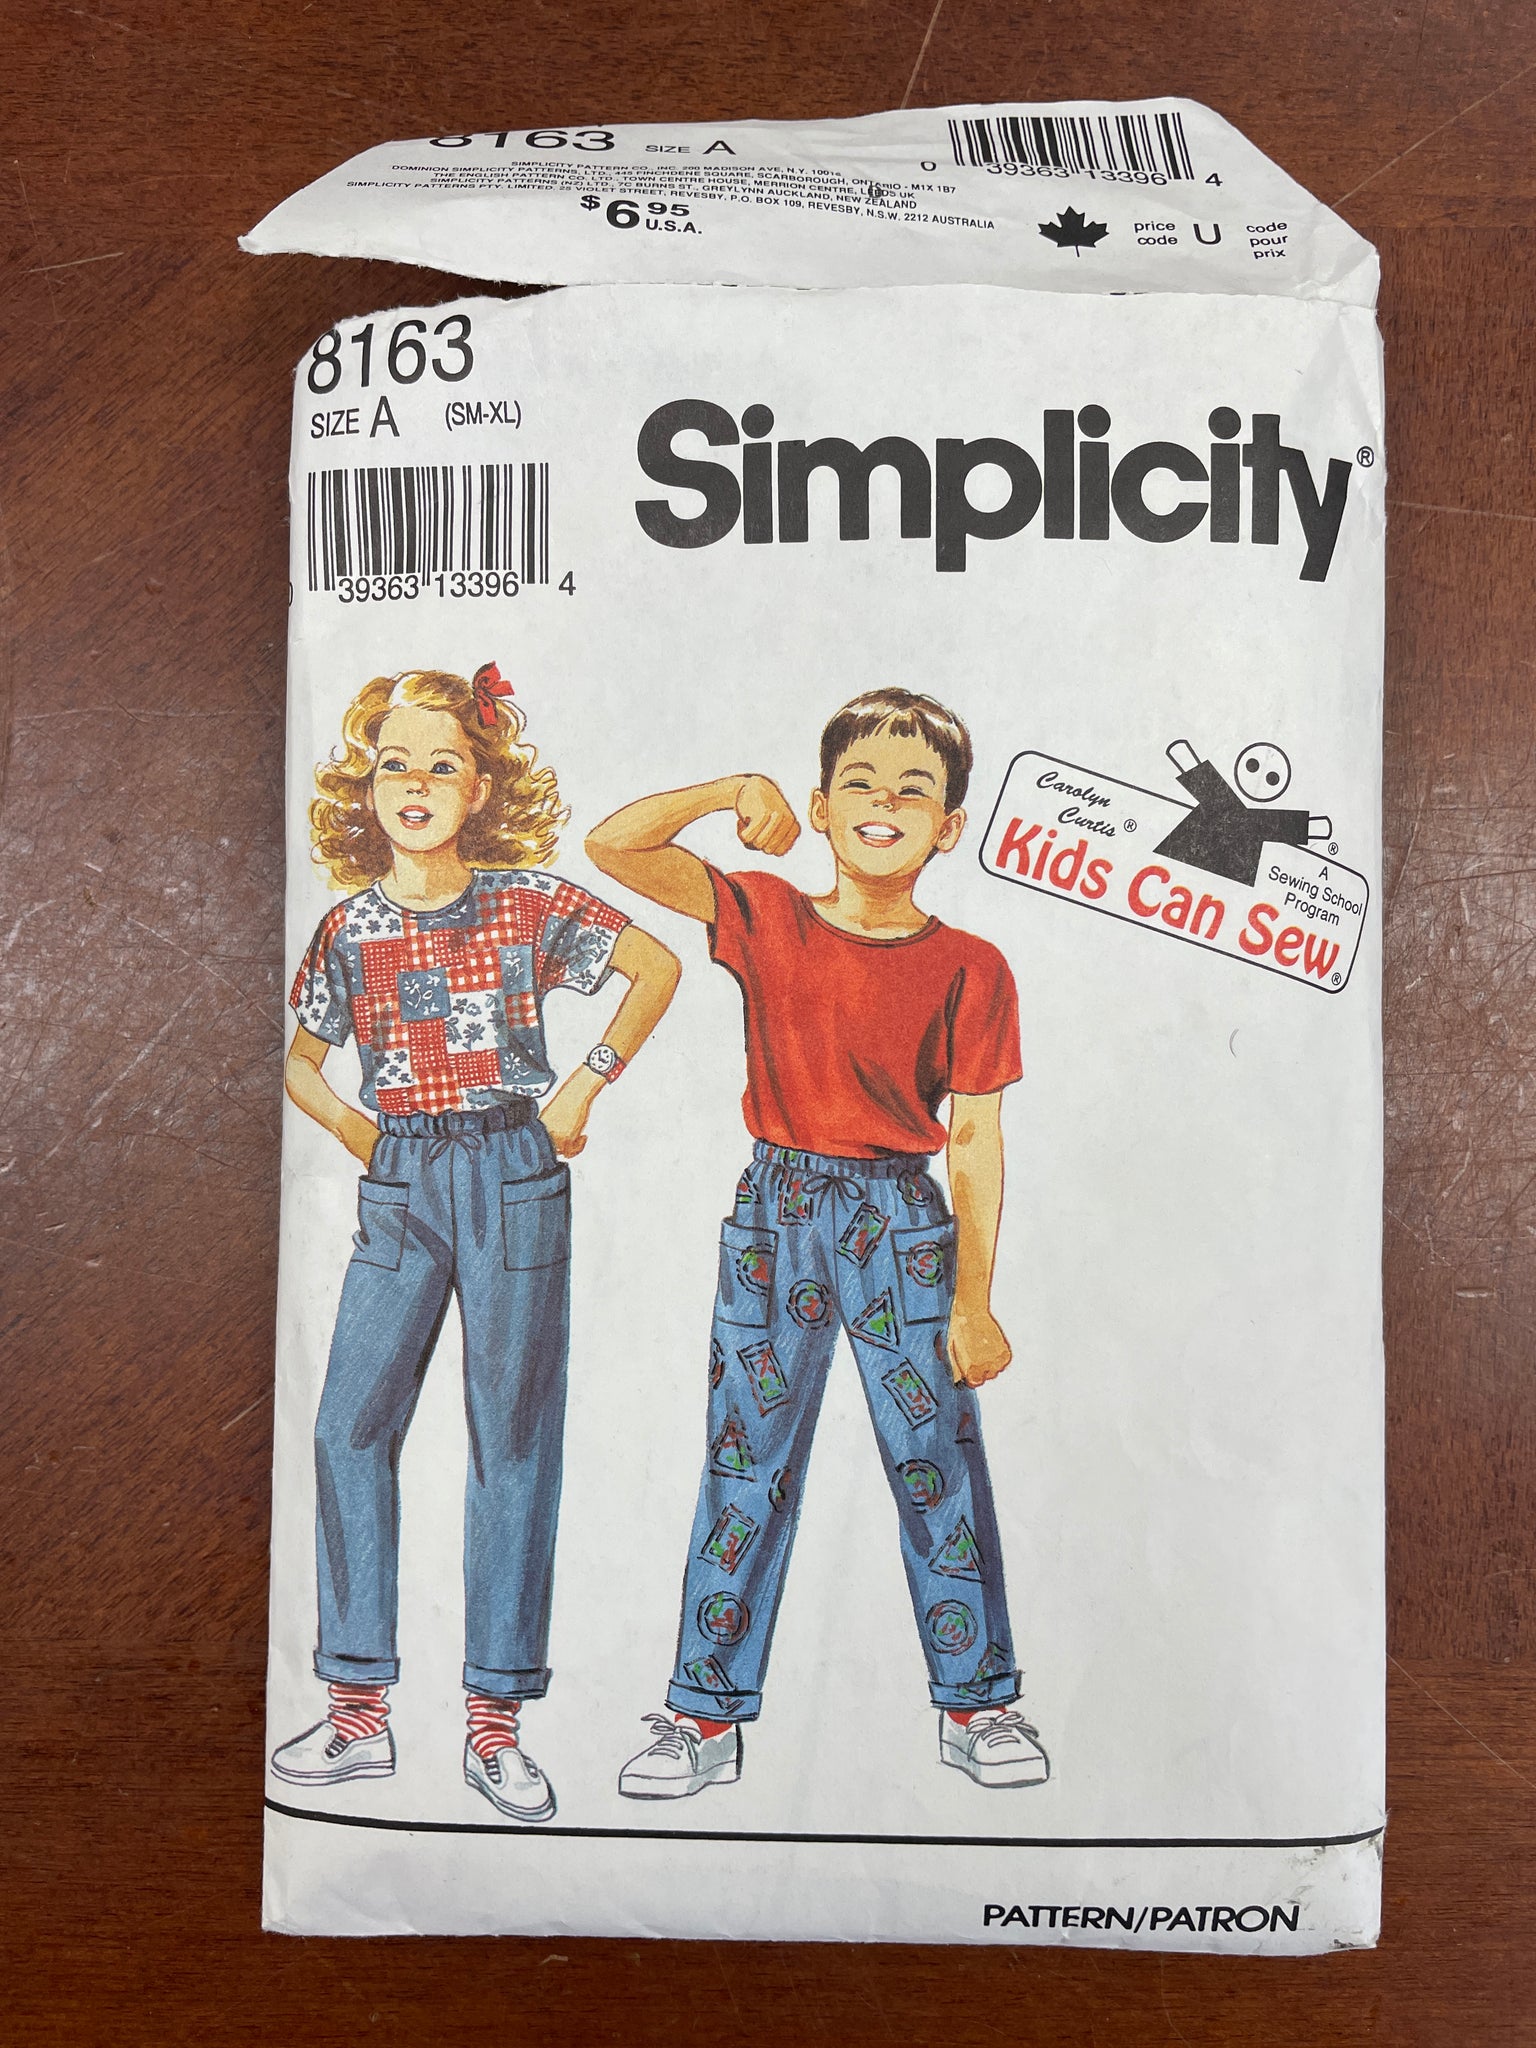 1992 Simplicity 8163 Pattern - Child's Pants